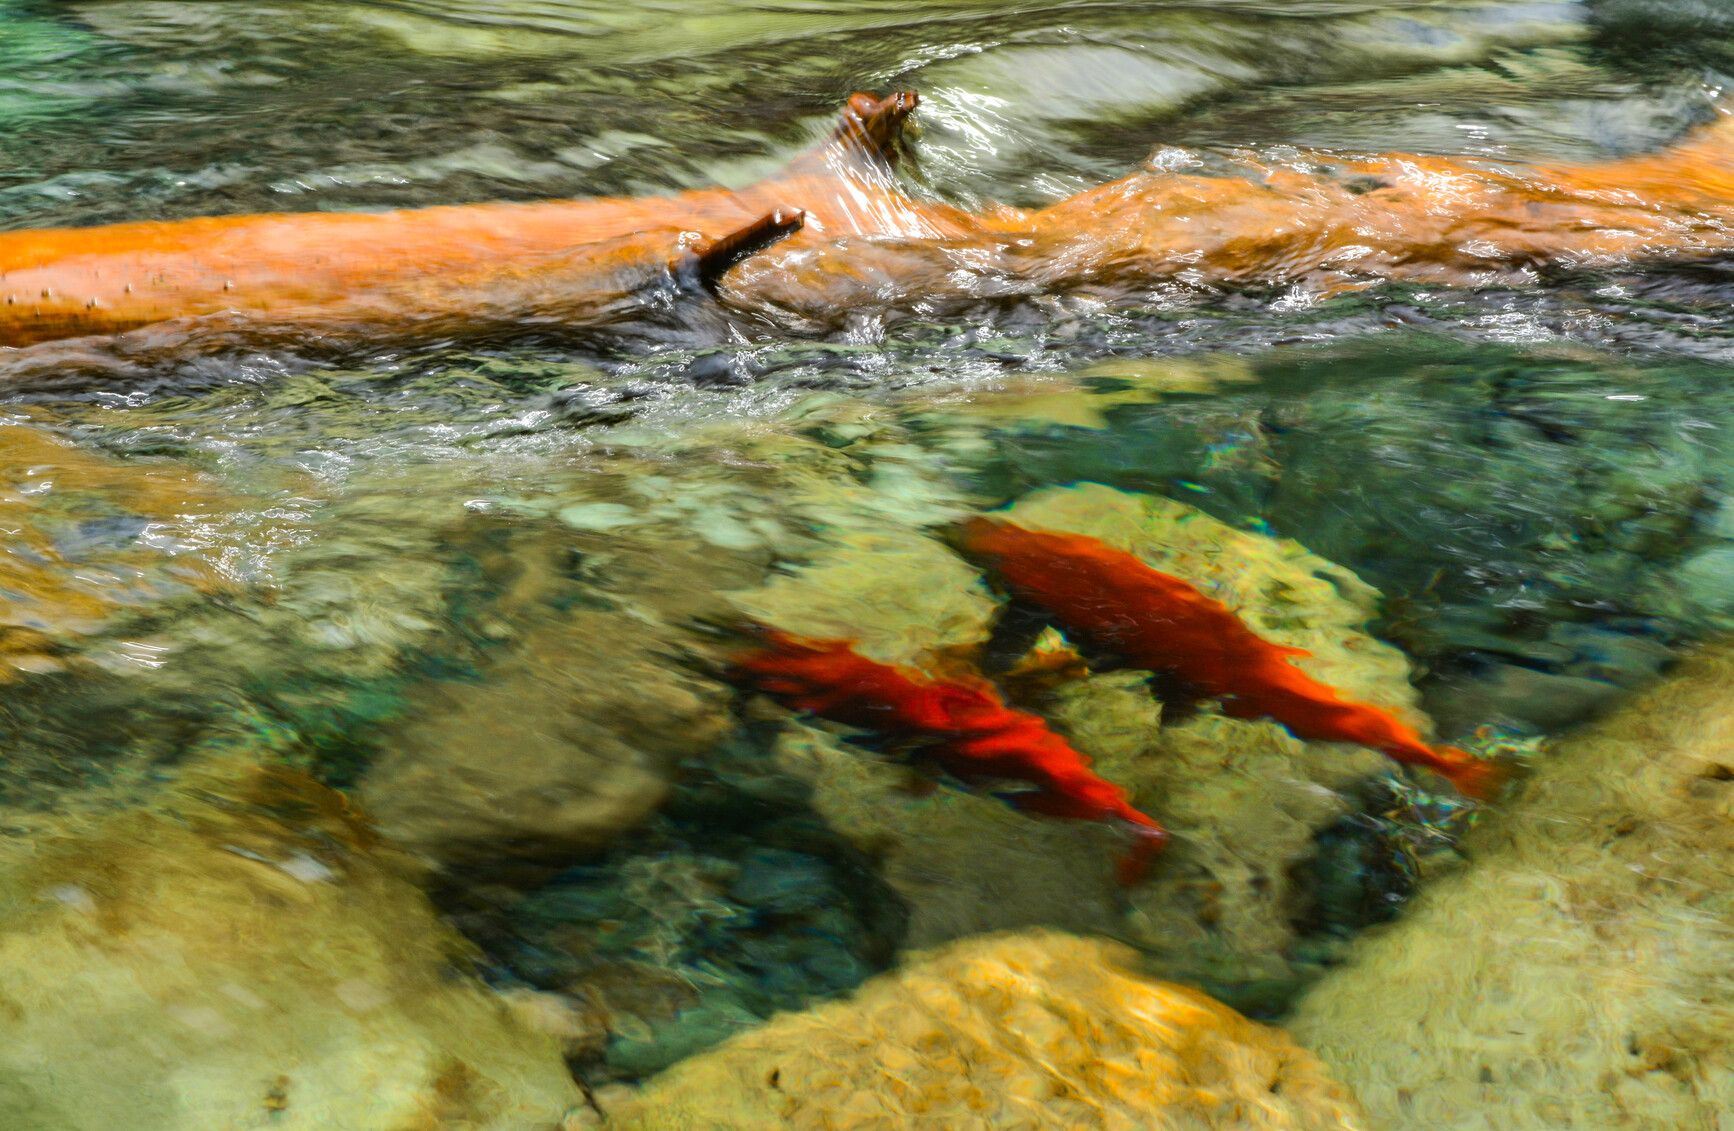 Sockeye salmon (Oncorhynchus nerka) swimming in Dennis creek in Rosebery Park.